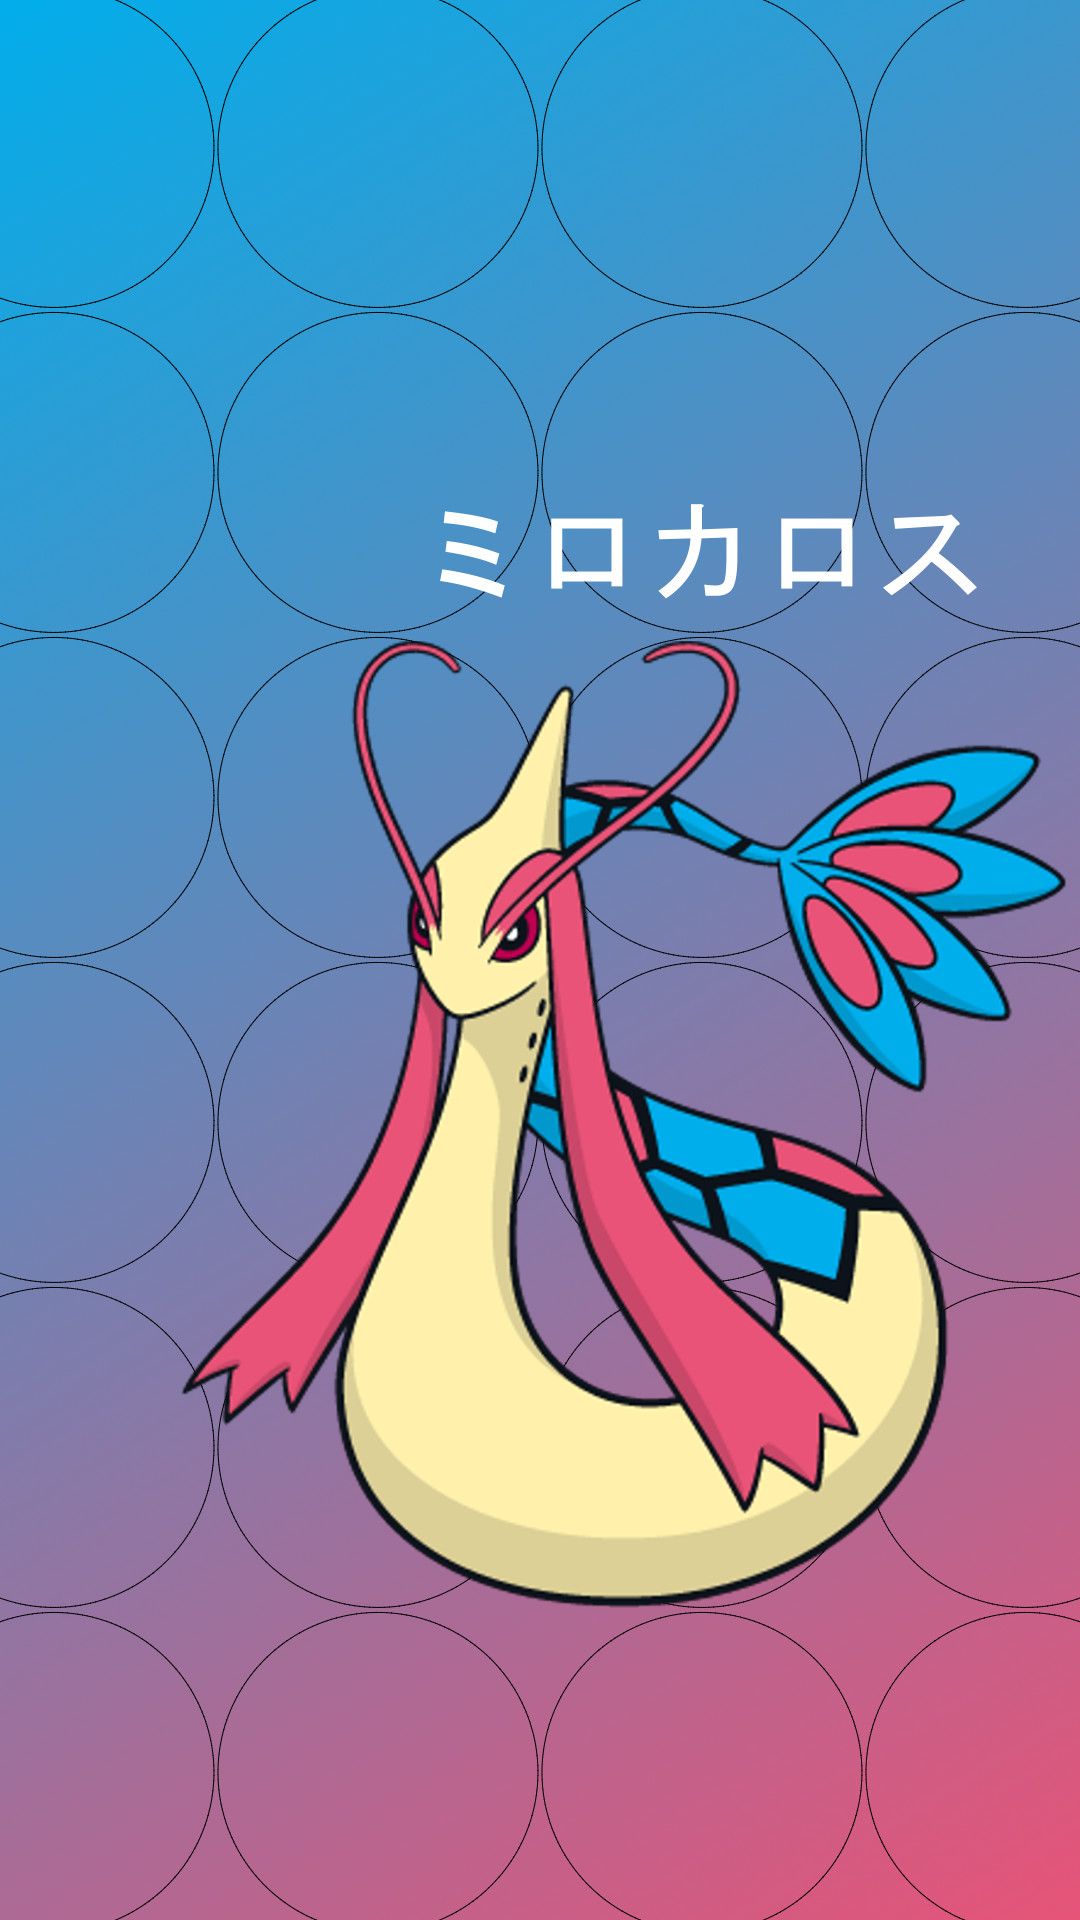 Download Hd Pokemon Phone Wallpapers(58+) – Free Desktop Backgrounds …